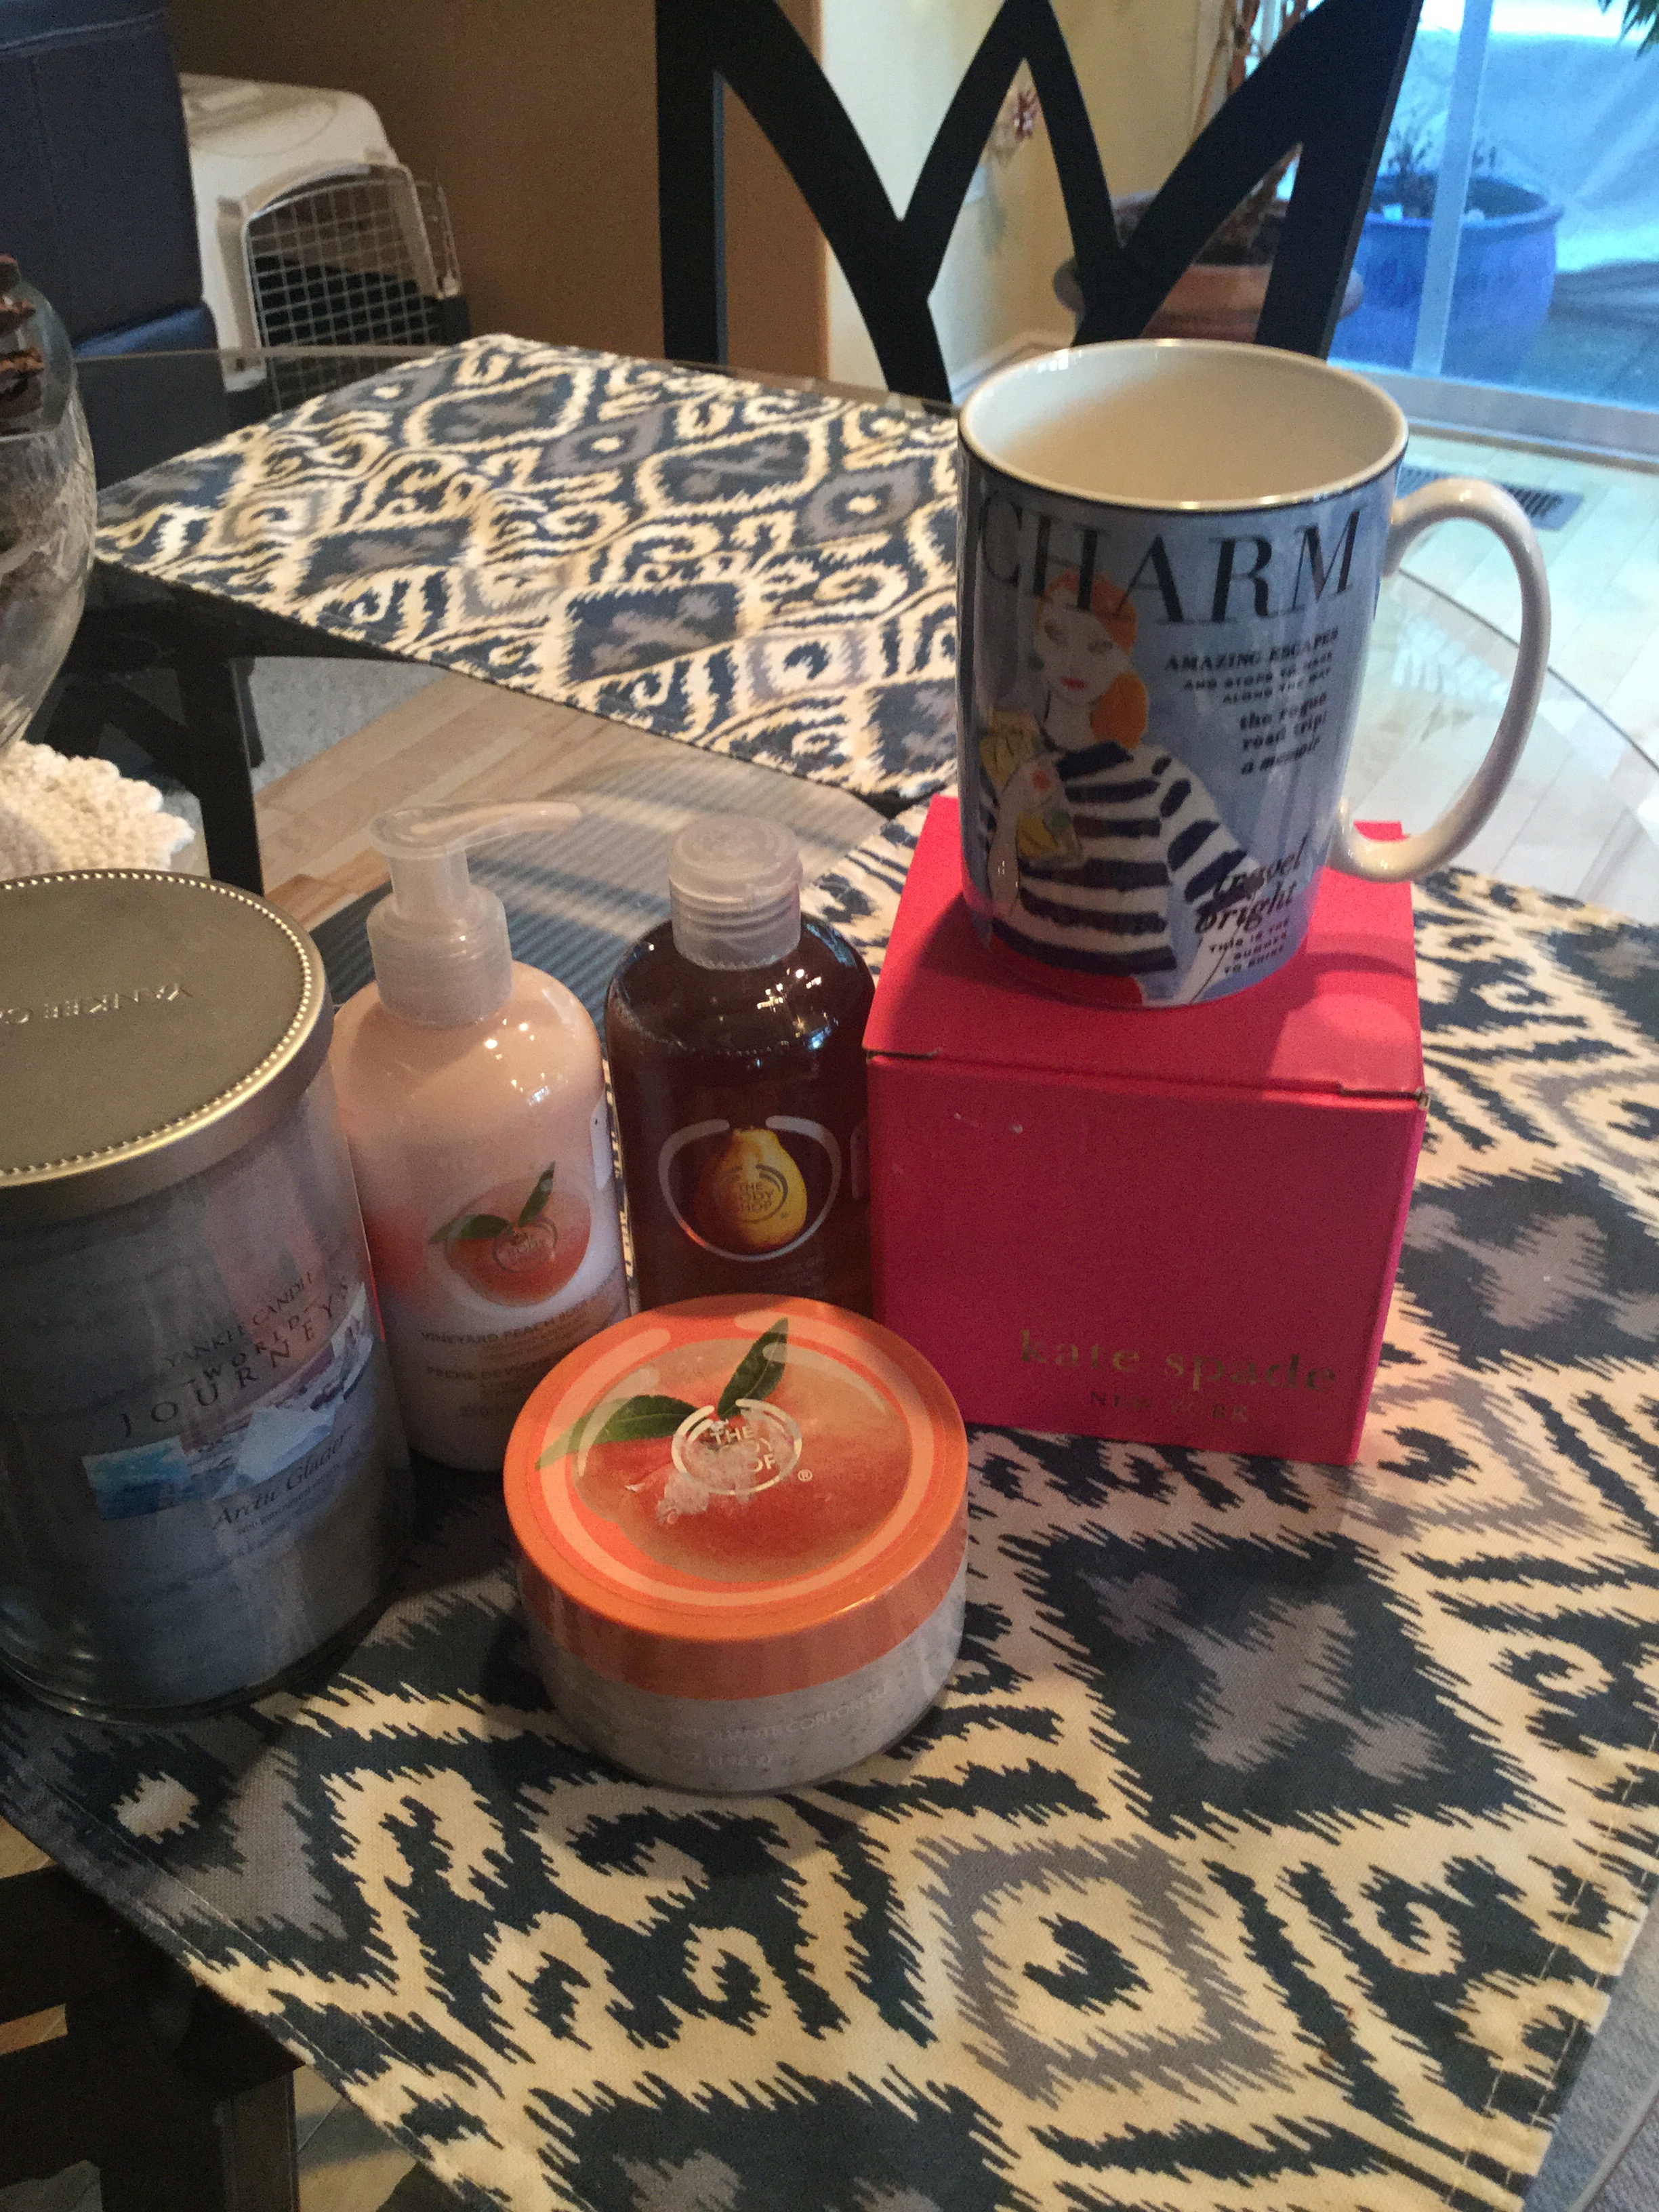 Home goods! I got a Kate Spade mug (she partnered with Lenox in this mug)